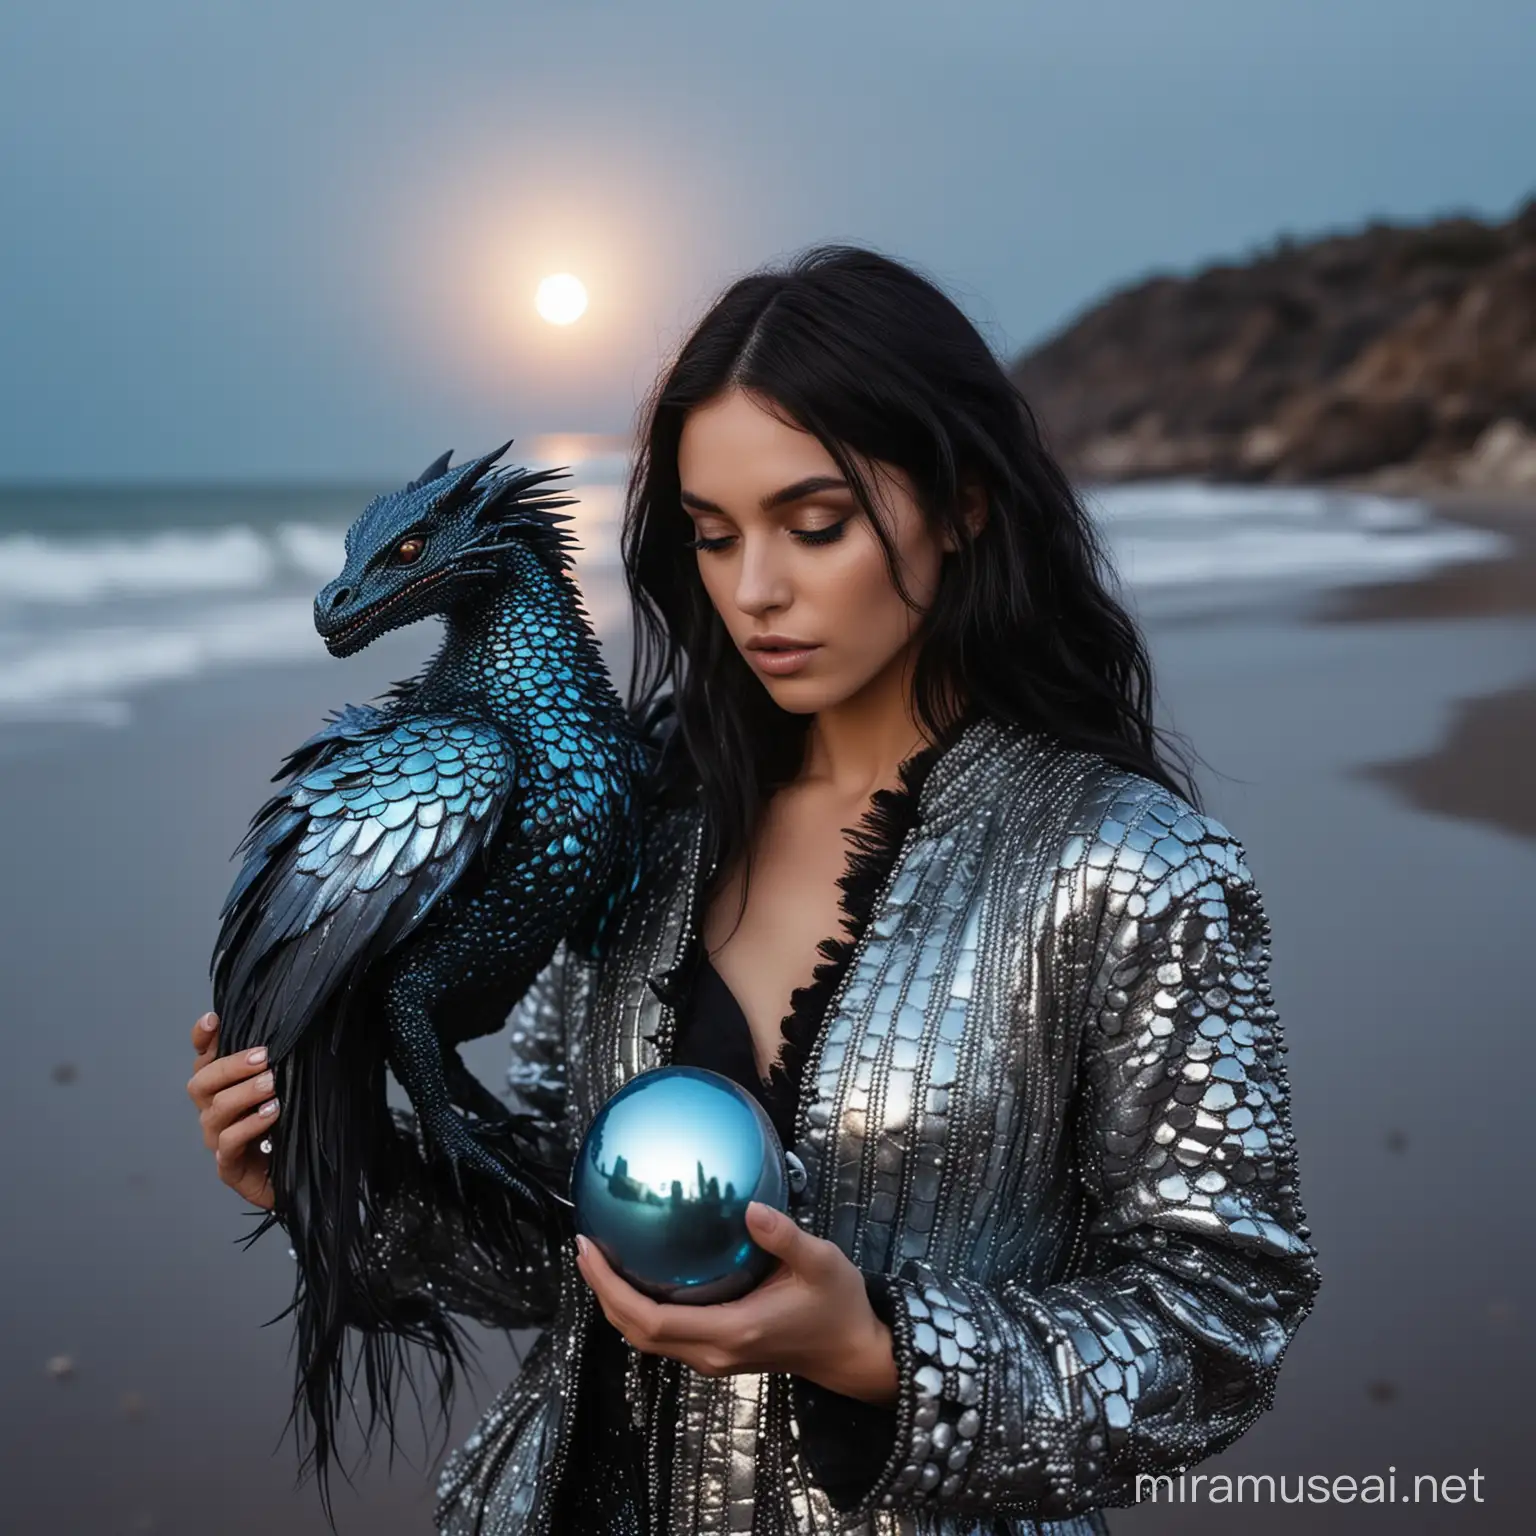 Elegant Model with Metallic Dragon in Silver Eggshell Under Moonlight